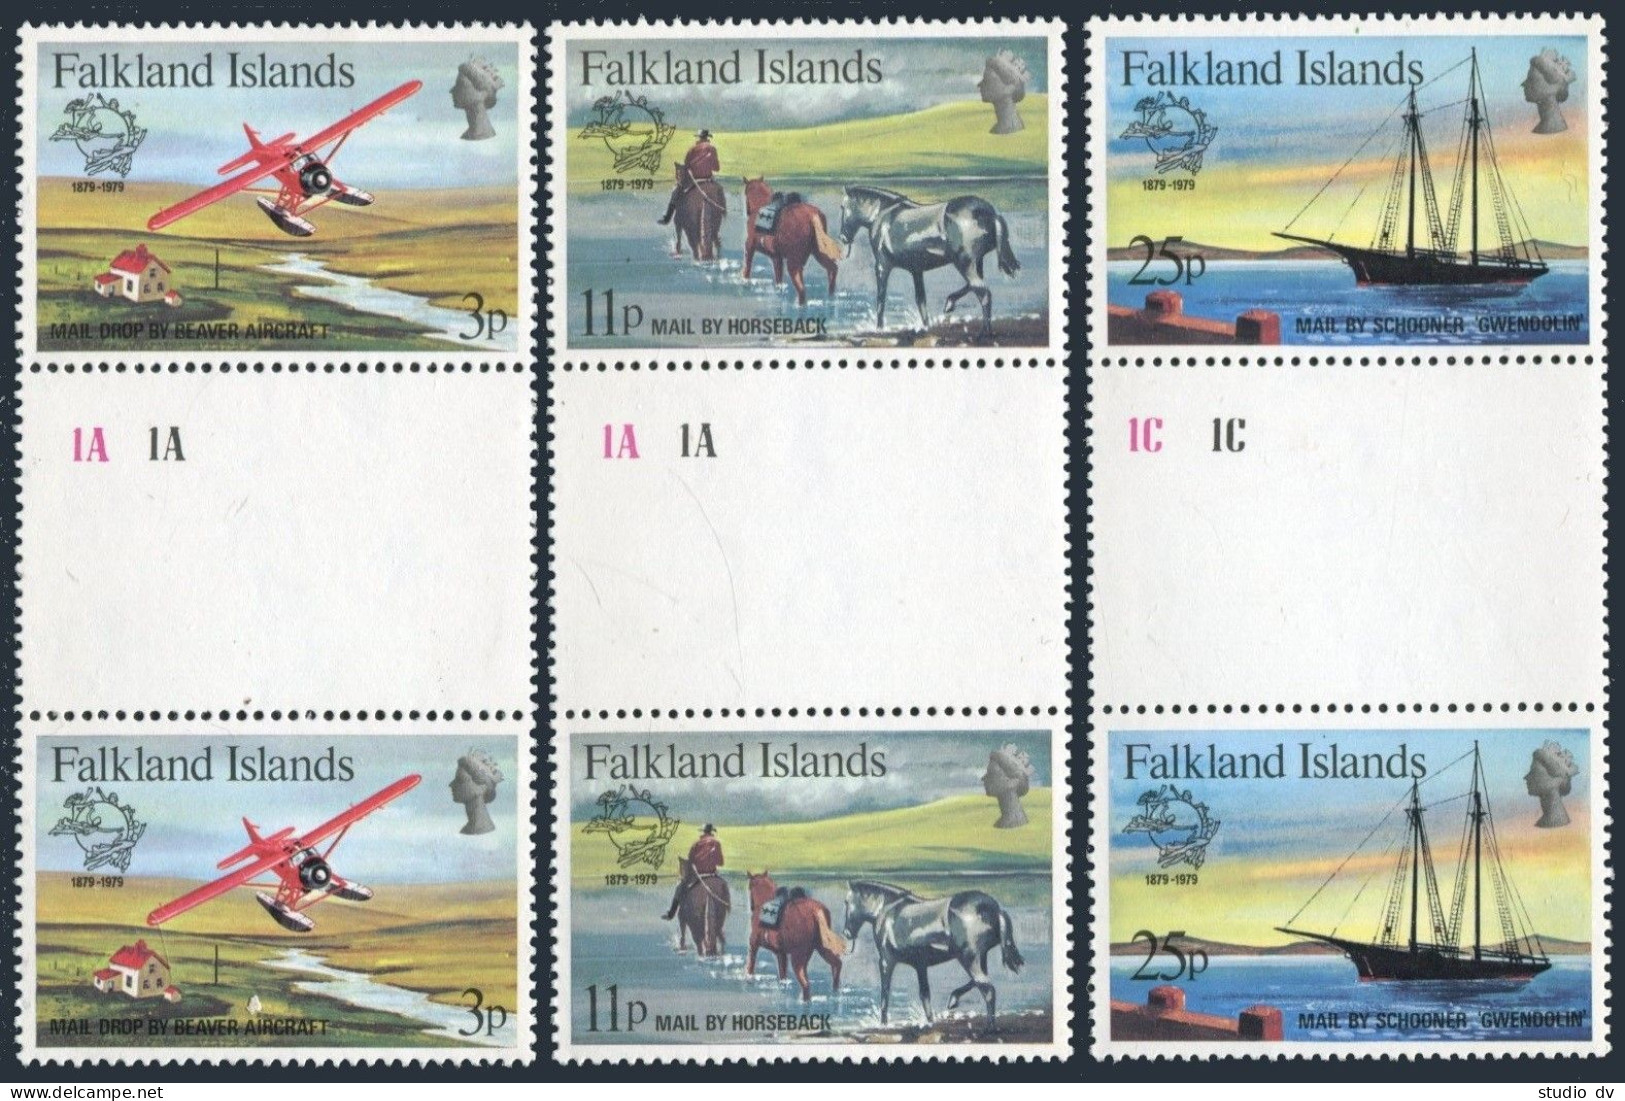 Falkland 295-297 Gutter, MNH. Michel 292-294. UPU Membership-100, 1979. - Falklandinseln